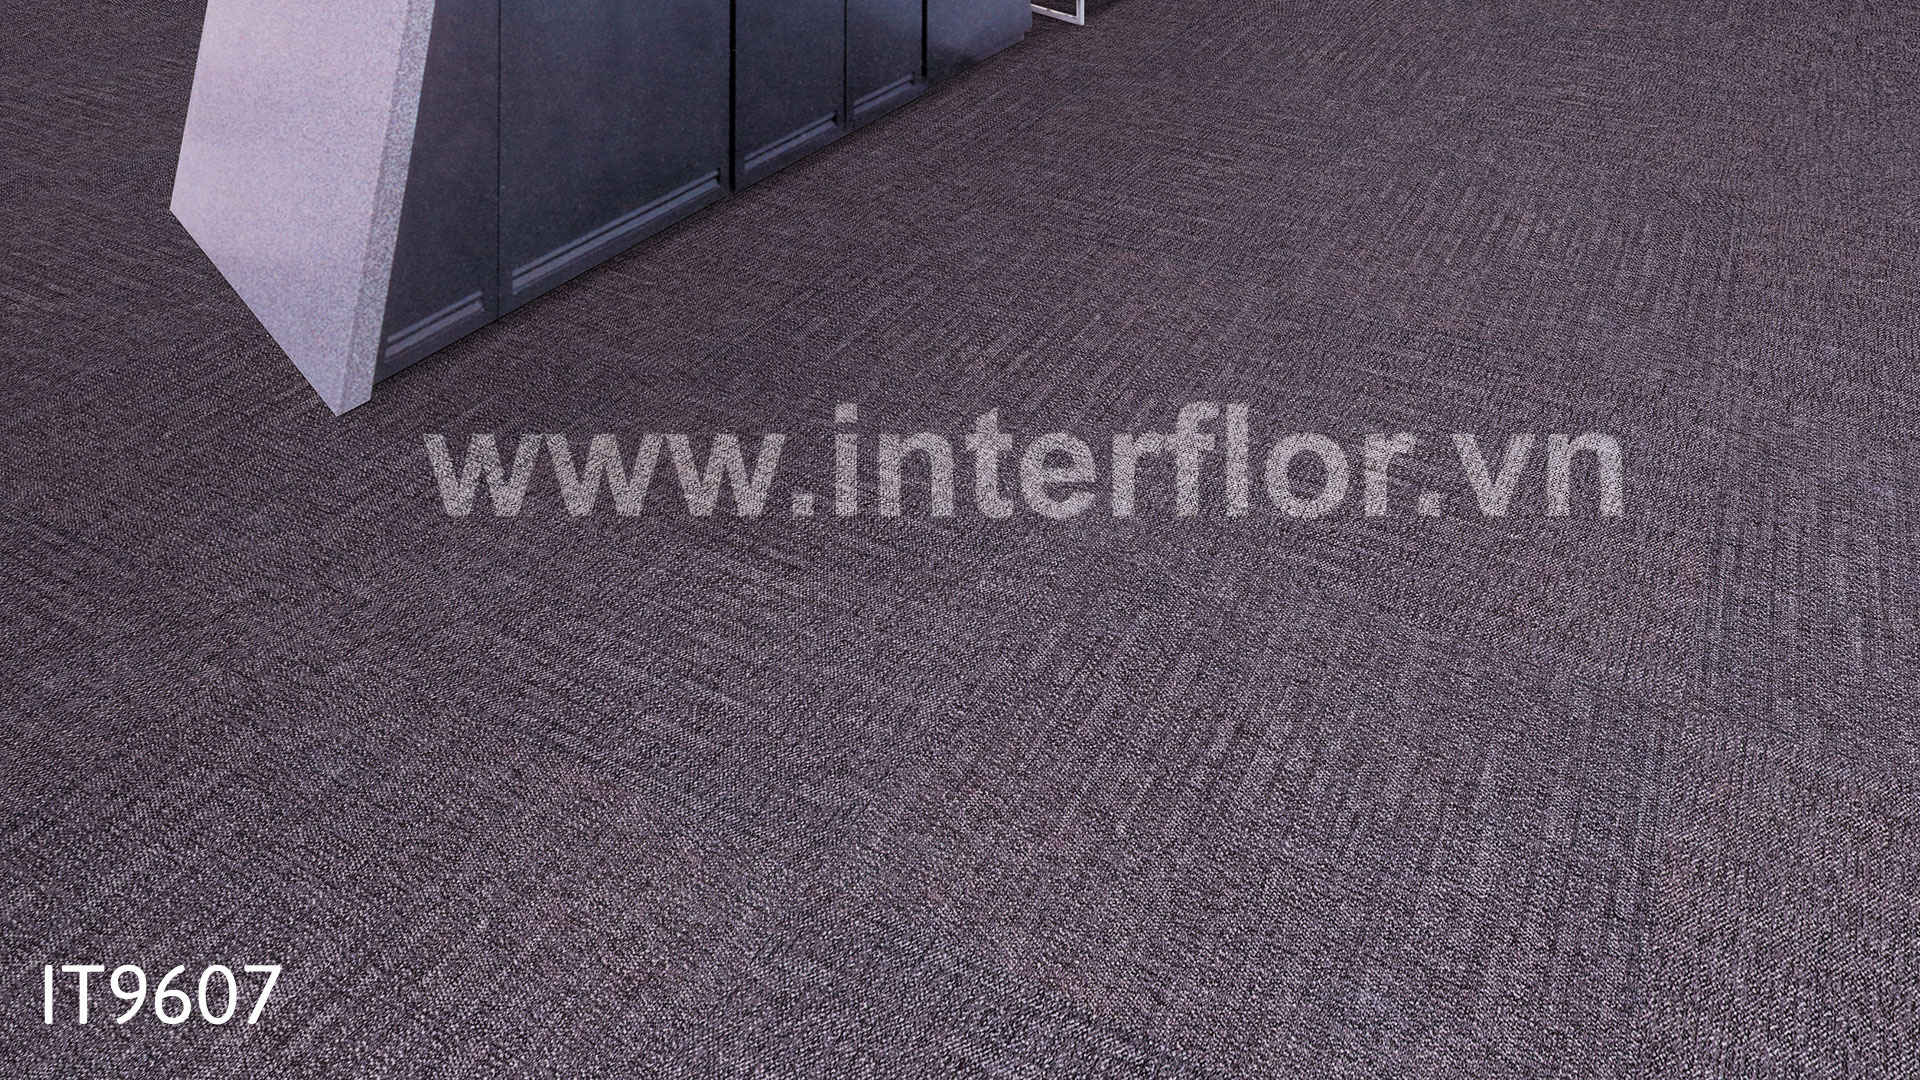 Thảm Interflor IT9607